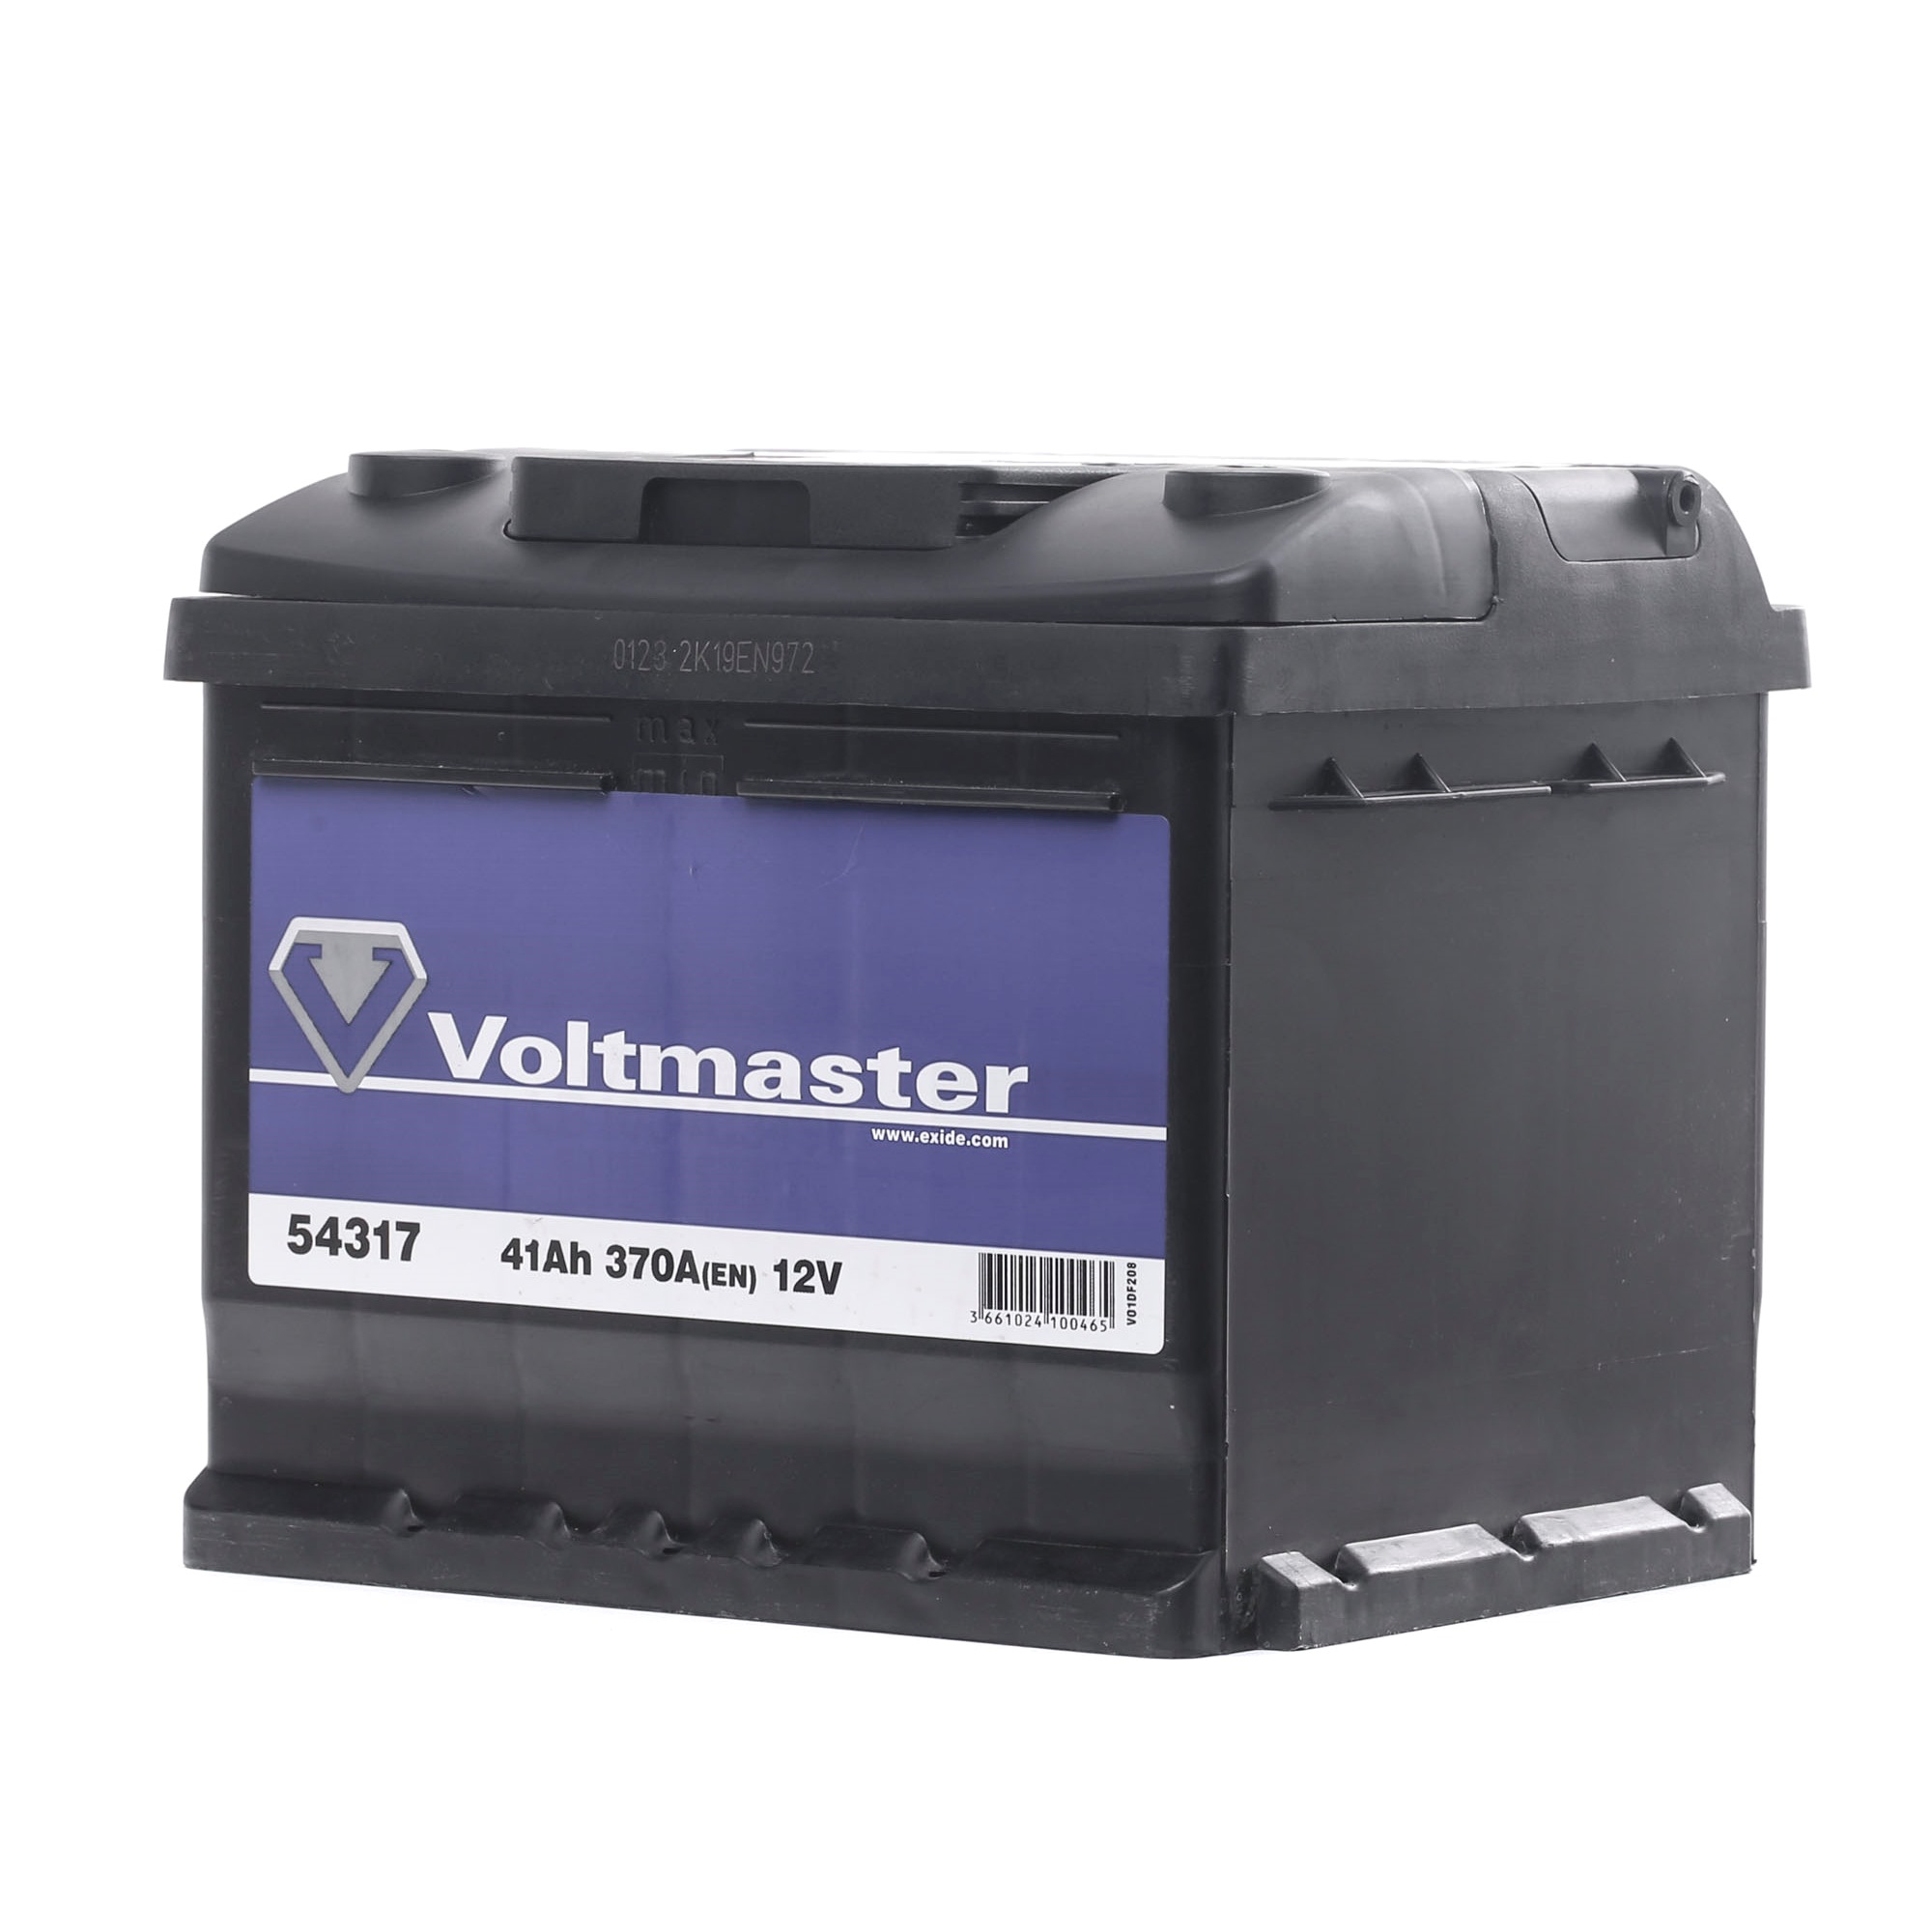 Skoda 100 Akkumulator Autoteile - Batterie VOLTMASTER 54317